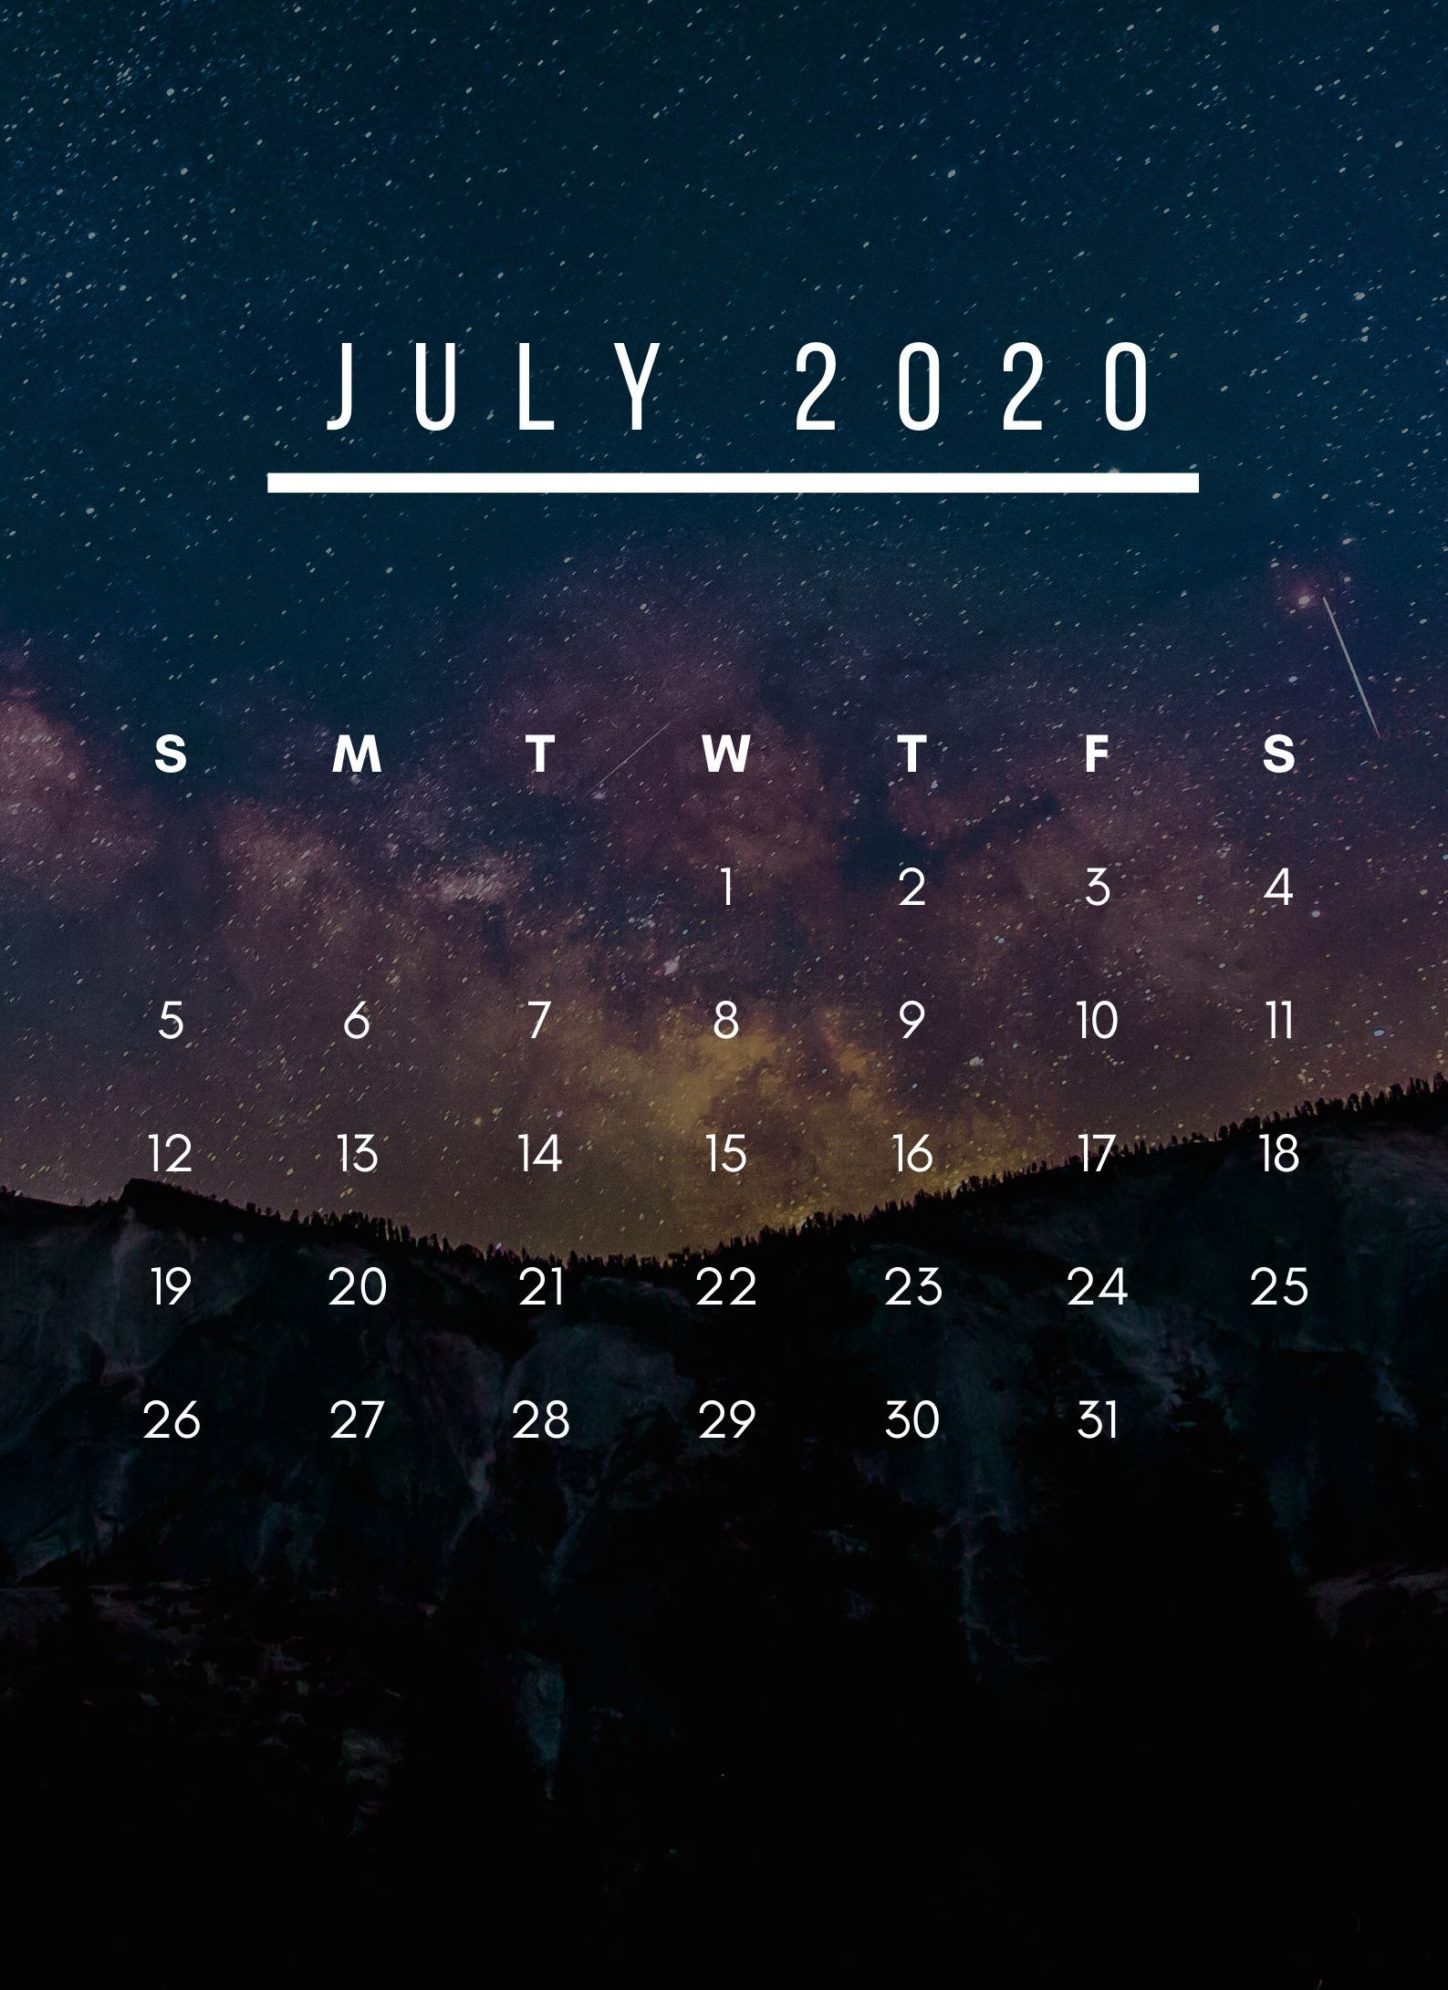 iPhone July 2020 HD Wallpaper